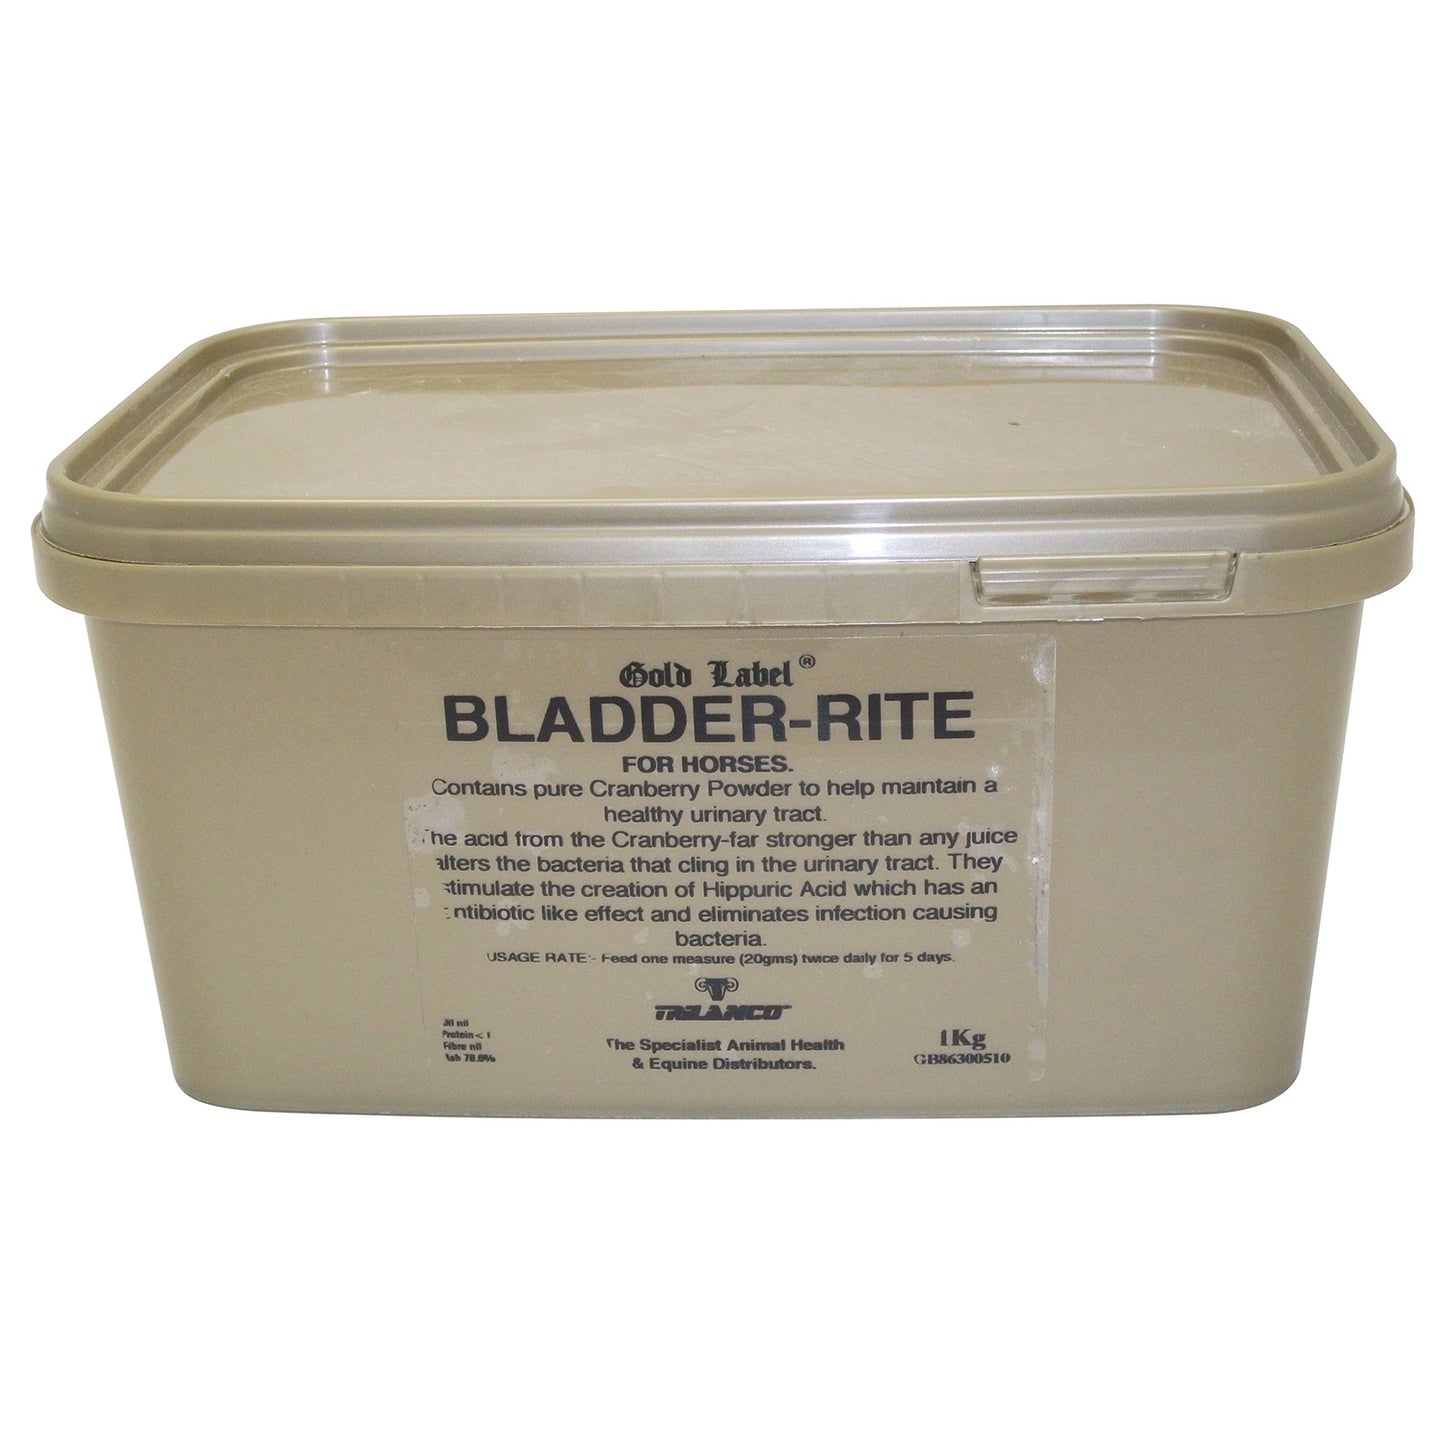 Gold Label Bladder-Rite